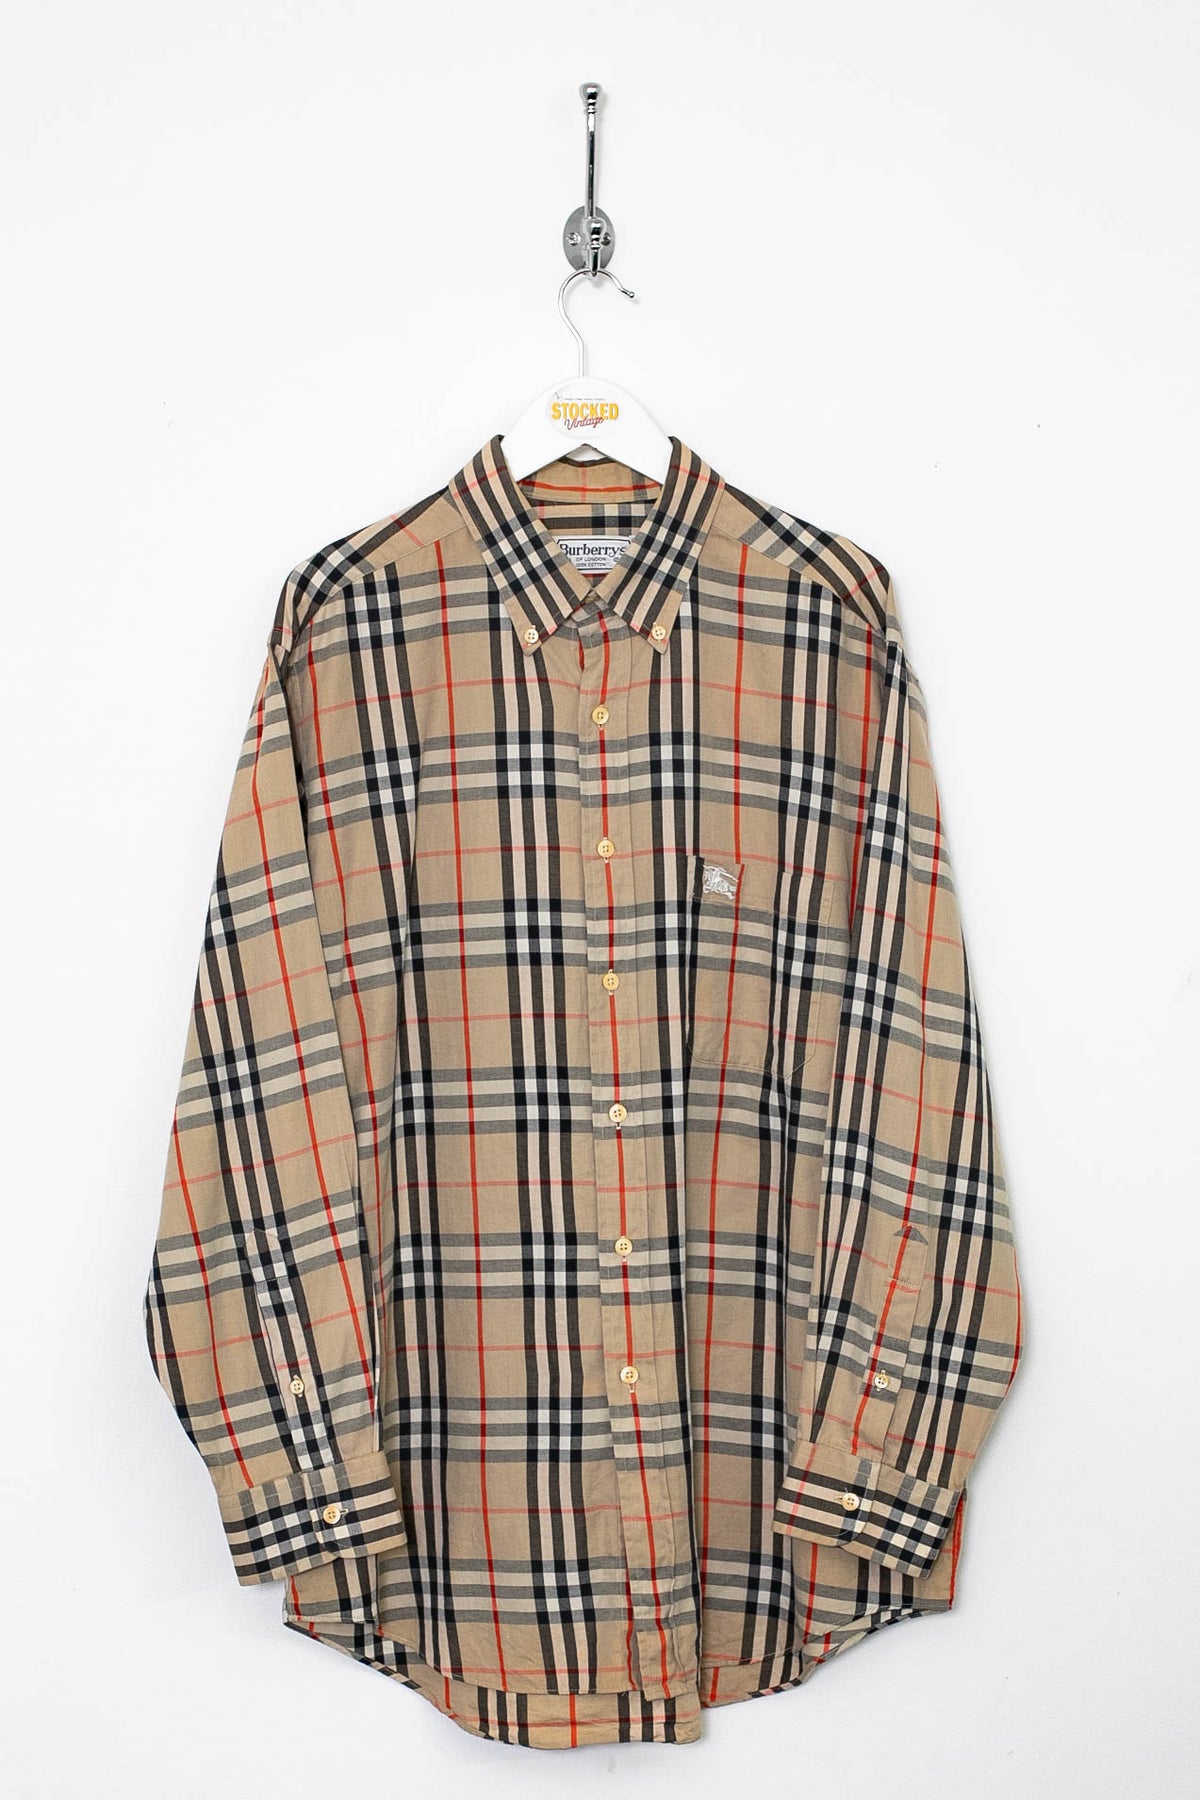 90s Burberry Shirt (L)